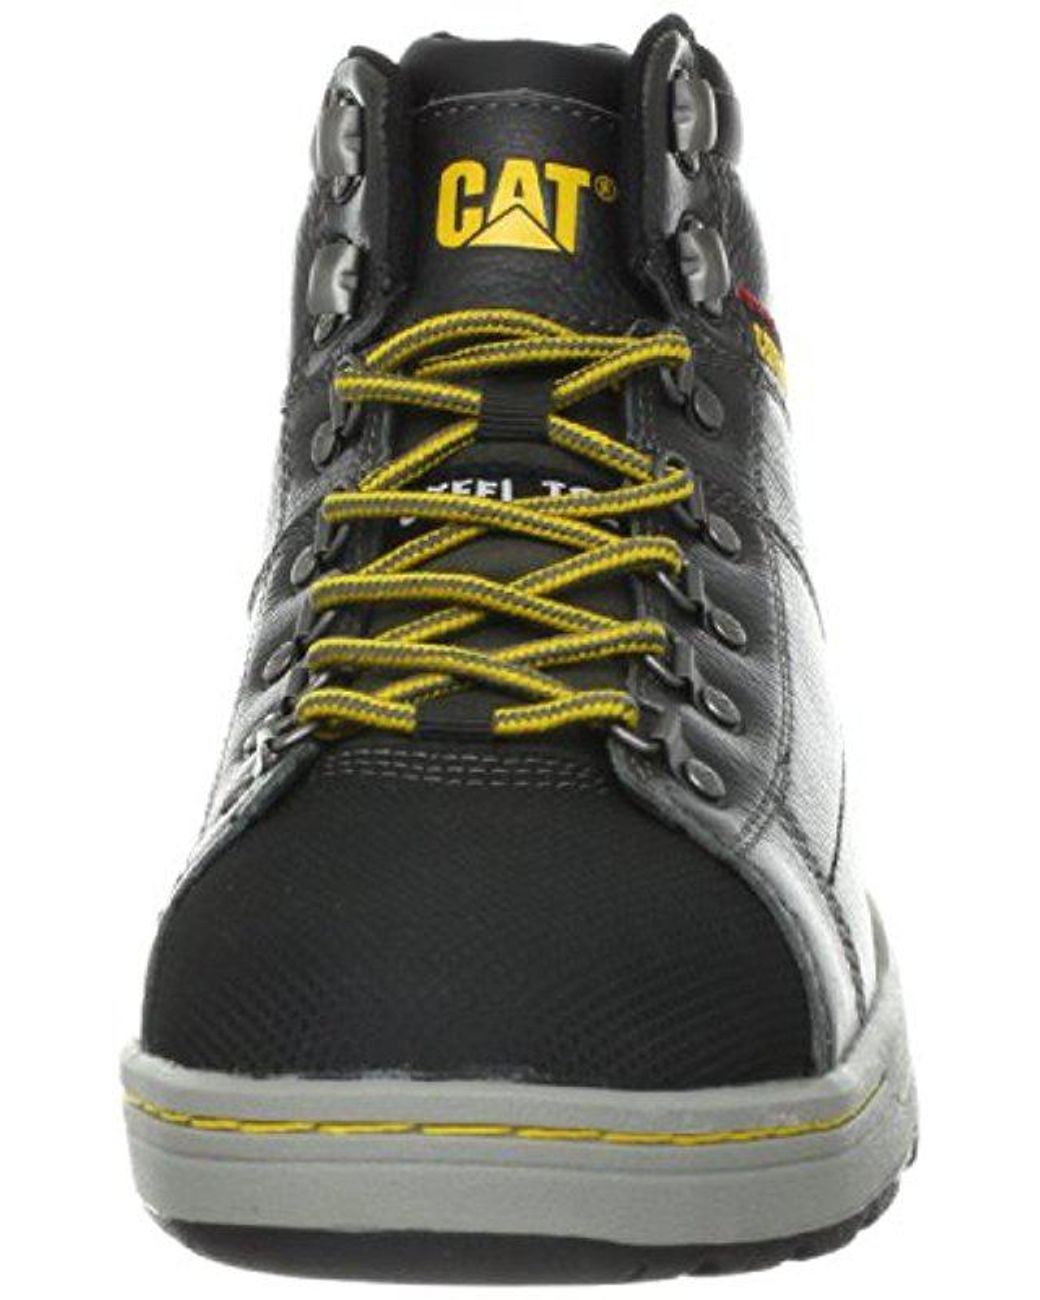 Caterpillar Brode Hi Steel Toe Skate Shoe for Men | Lyst